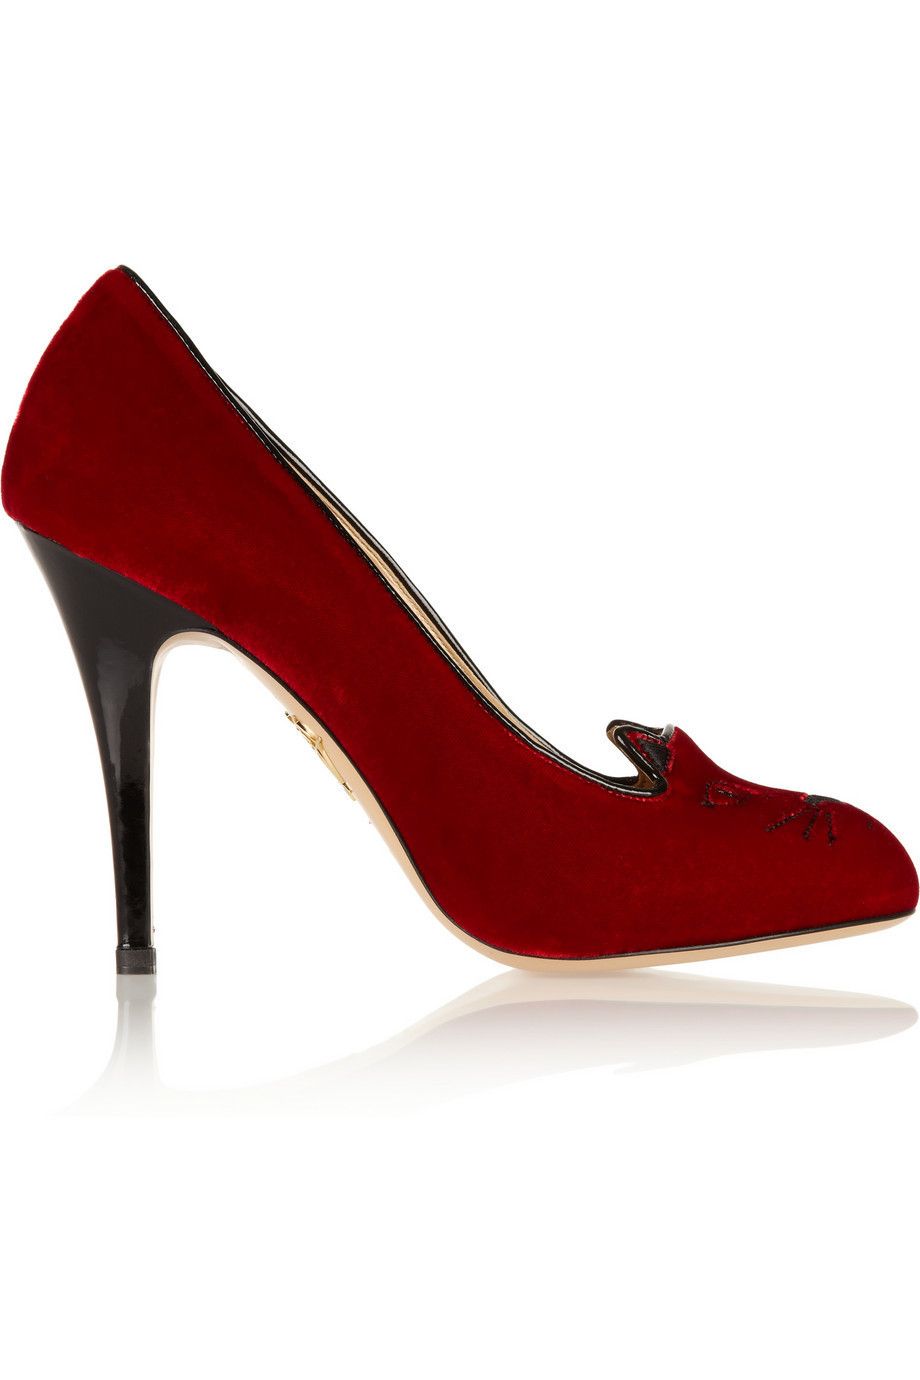 Footwear, Red, High heels, Carmine, Maroon, Fashion, Basic pump, Tan, Beige, Dancing shoe, 